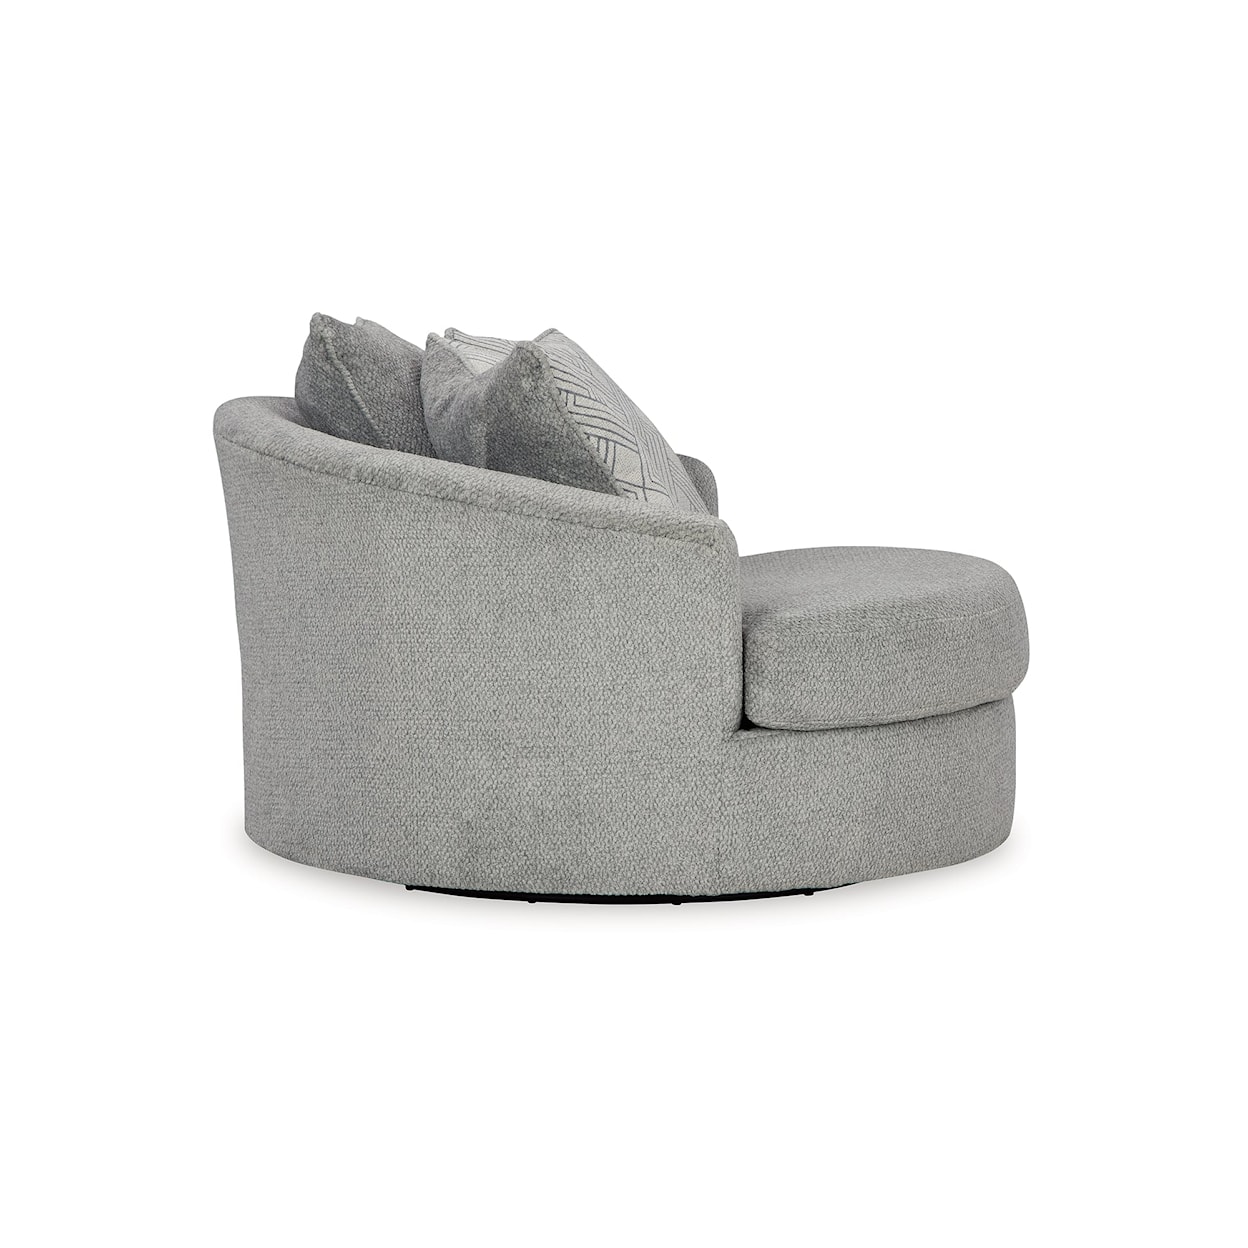 Ashley Furniture Signature Design Casselbury Oversized Swivel Accent Chair